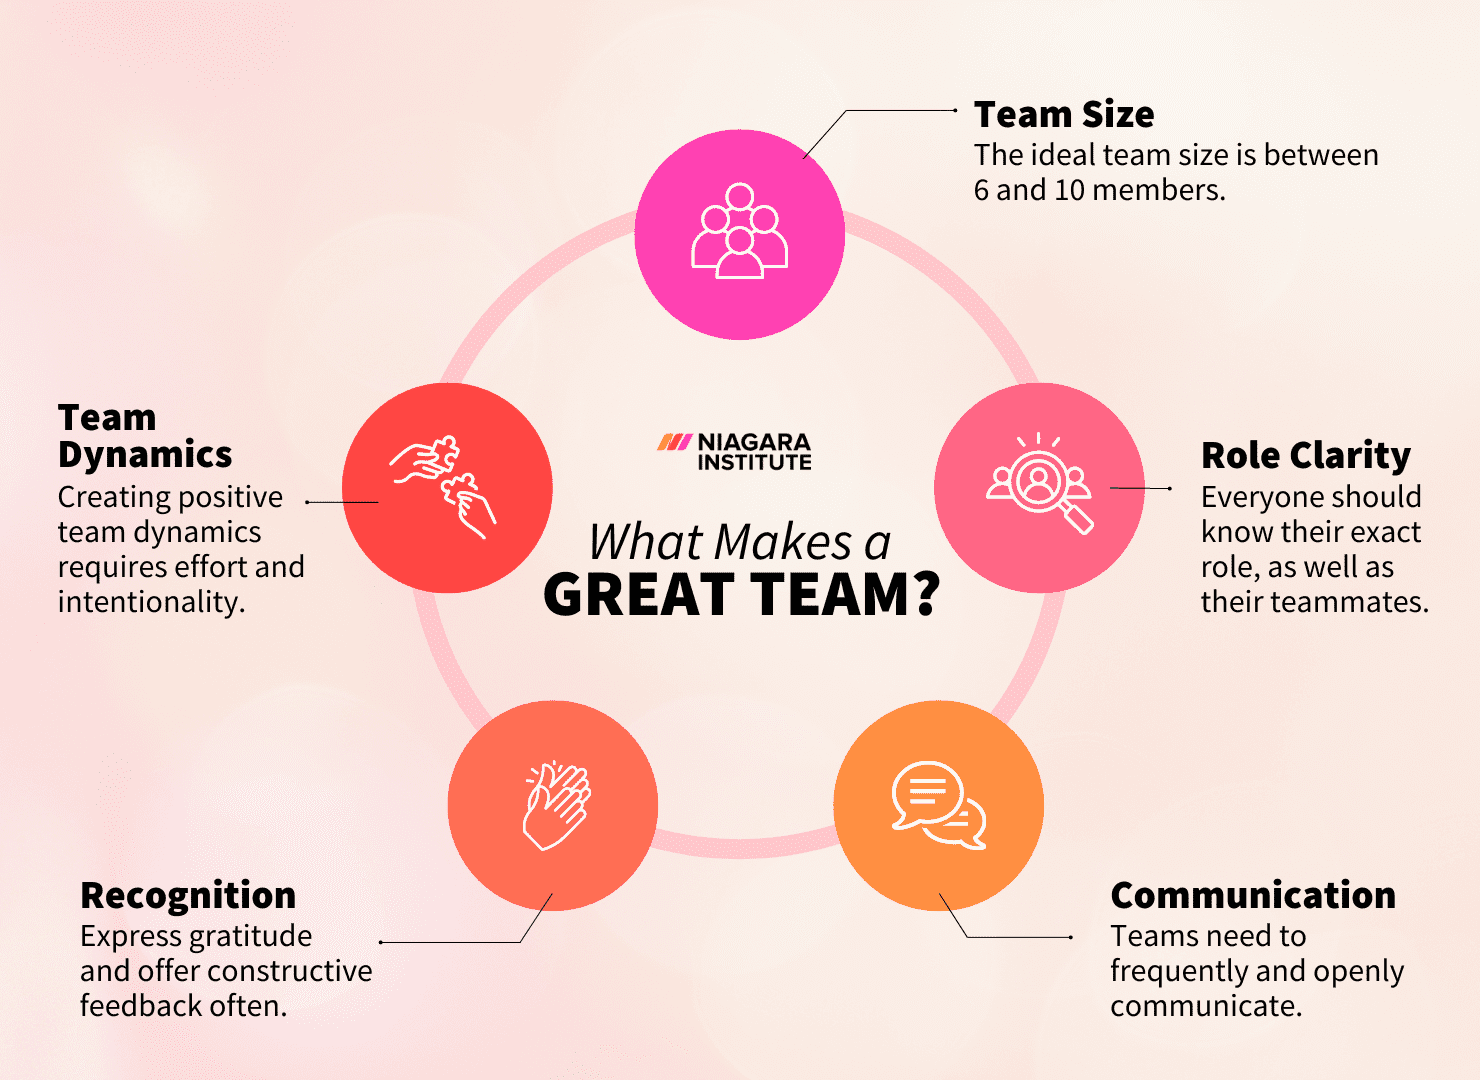 What Makes a Great Team - Niagara Institute (1)